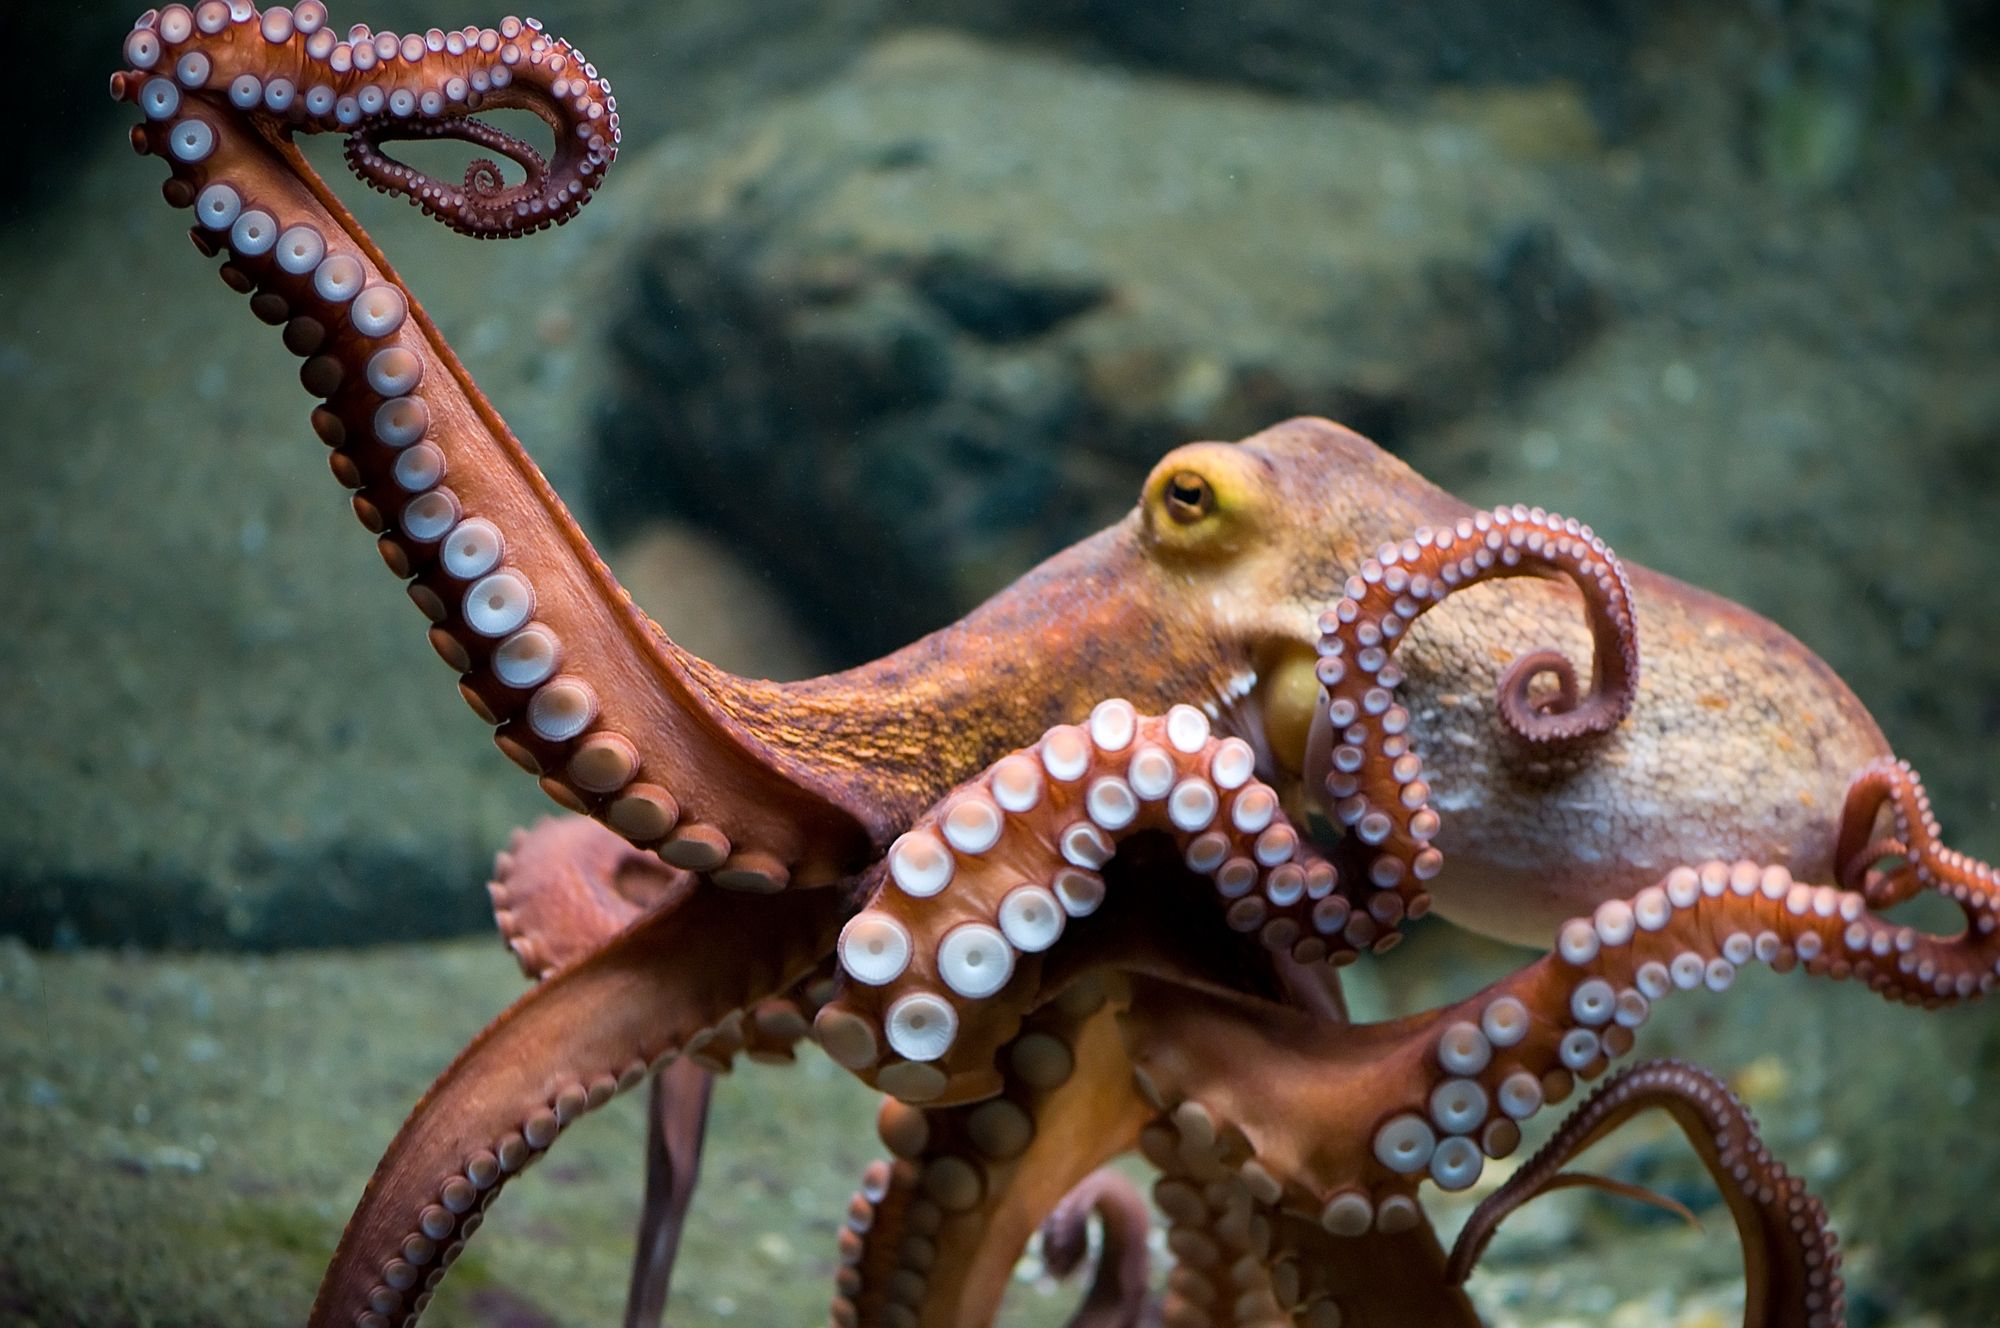 Octopus Wallpaper HD